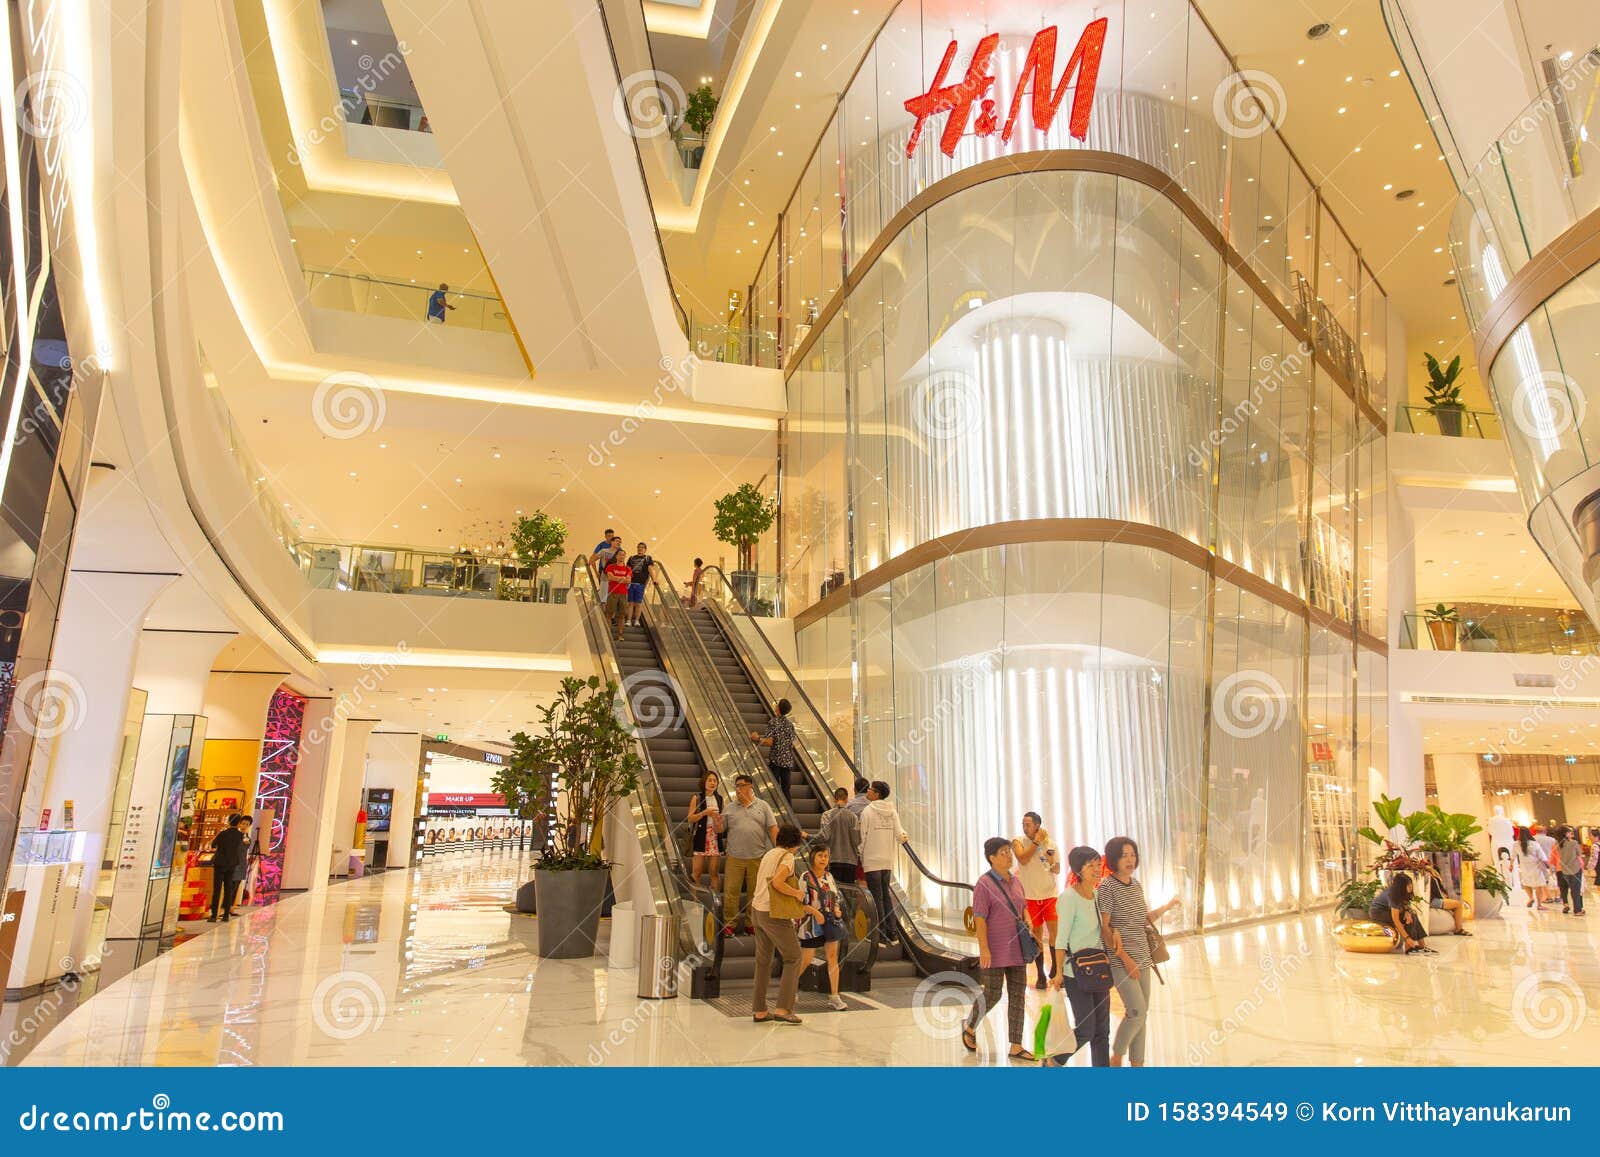 Icon Siam New Modern Shopping Mall in Bangkok Most Elegant Luxury